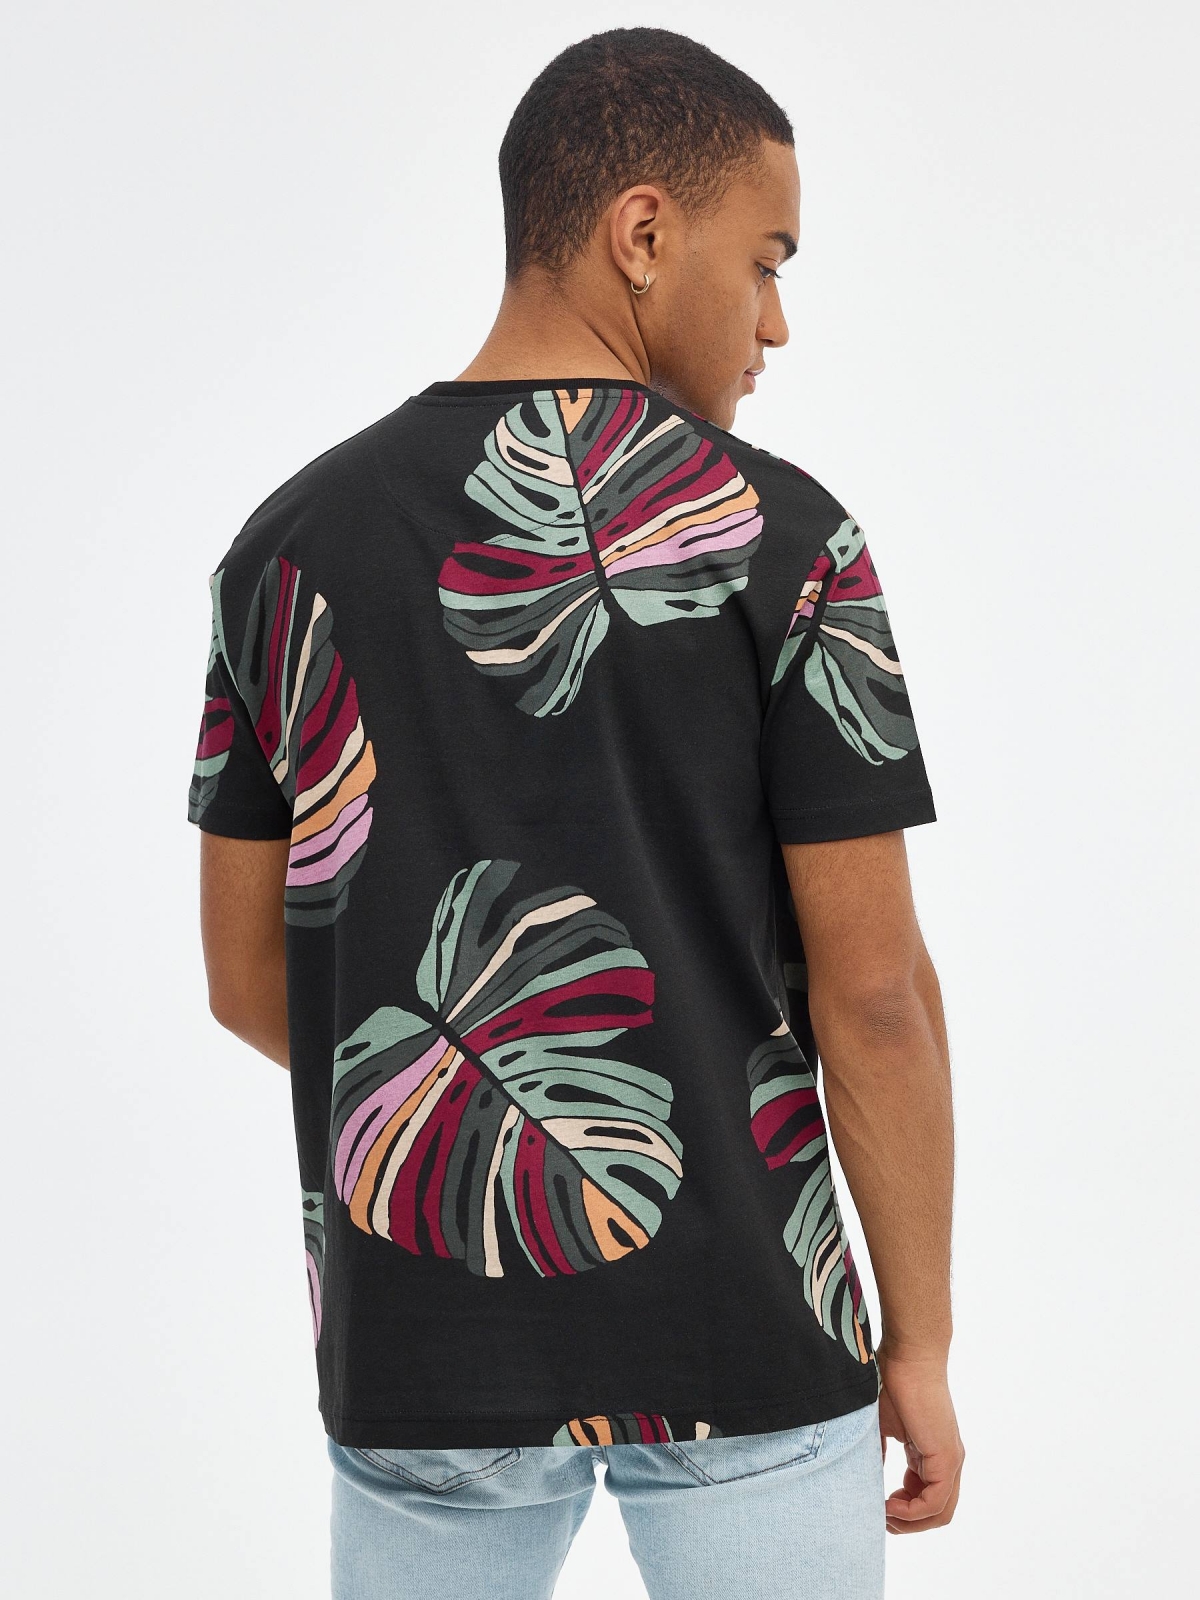 Multicolor leaf print t-shirt black middle back view